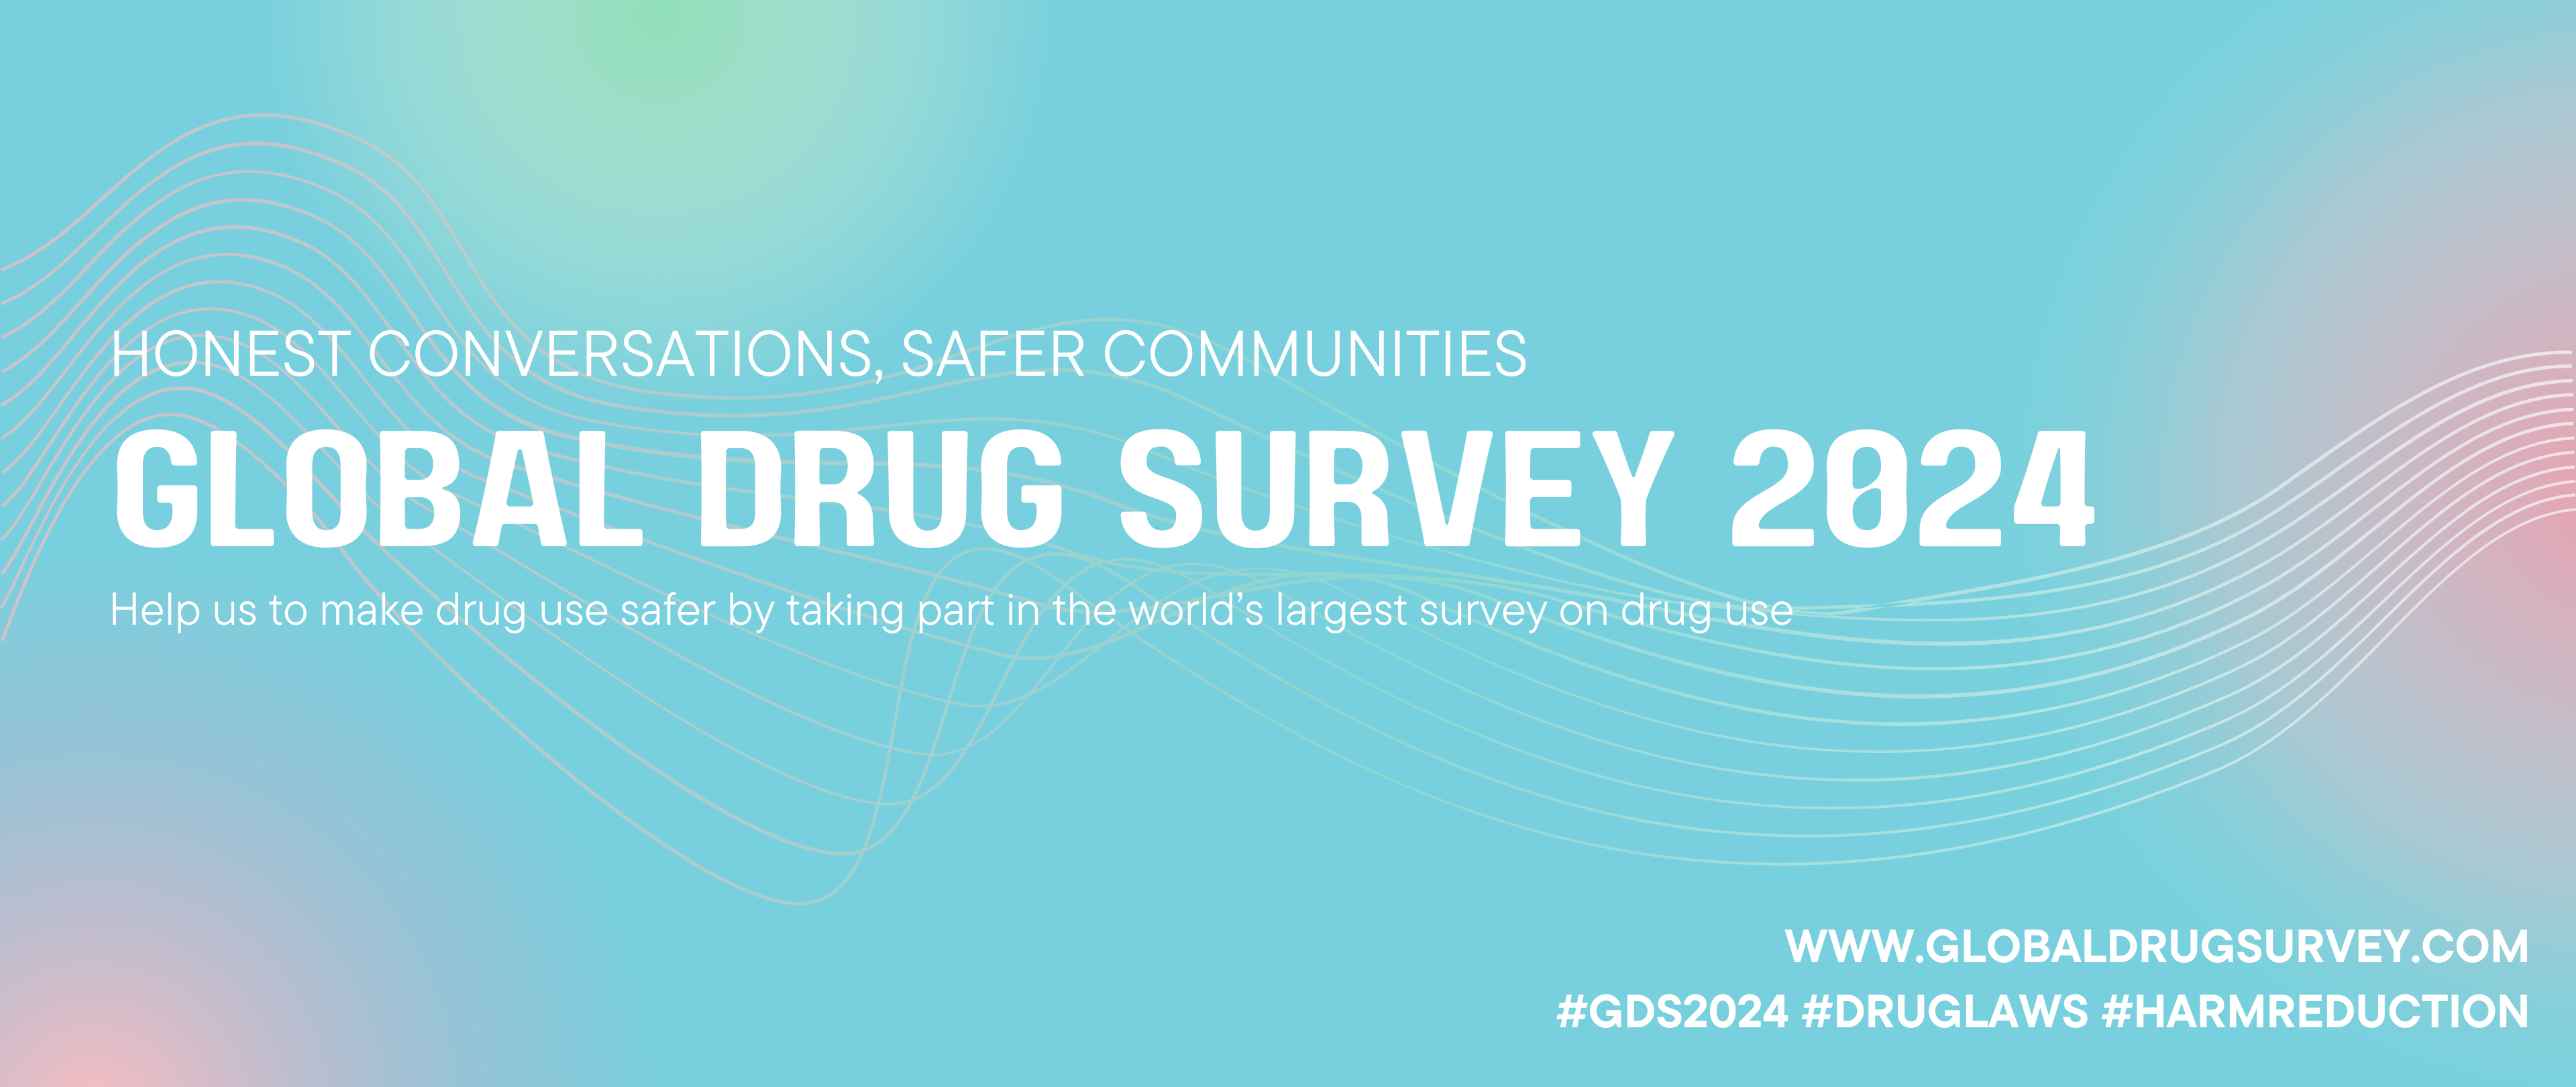 Global Drug Survey 2024 launches